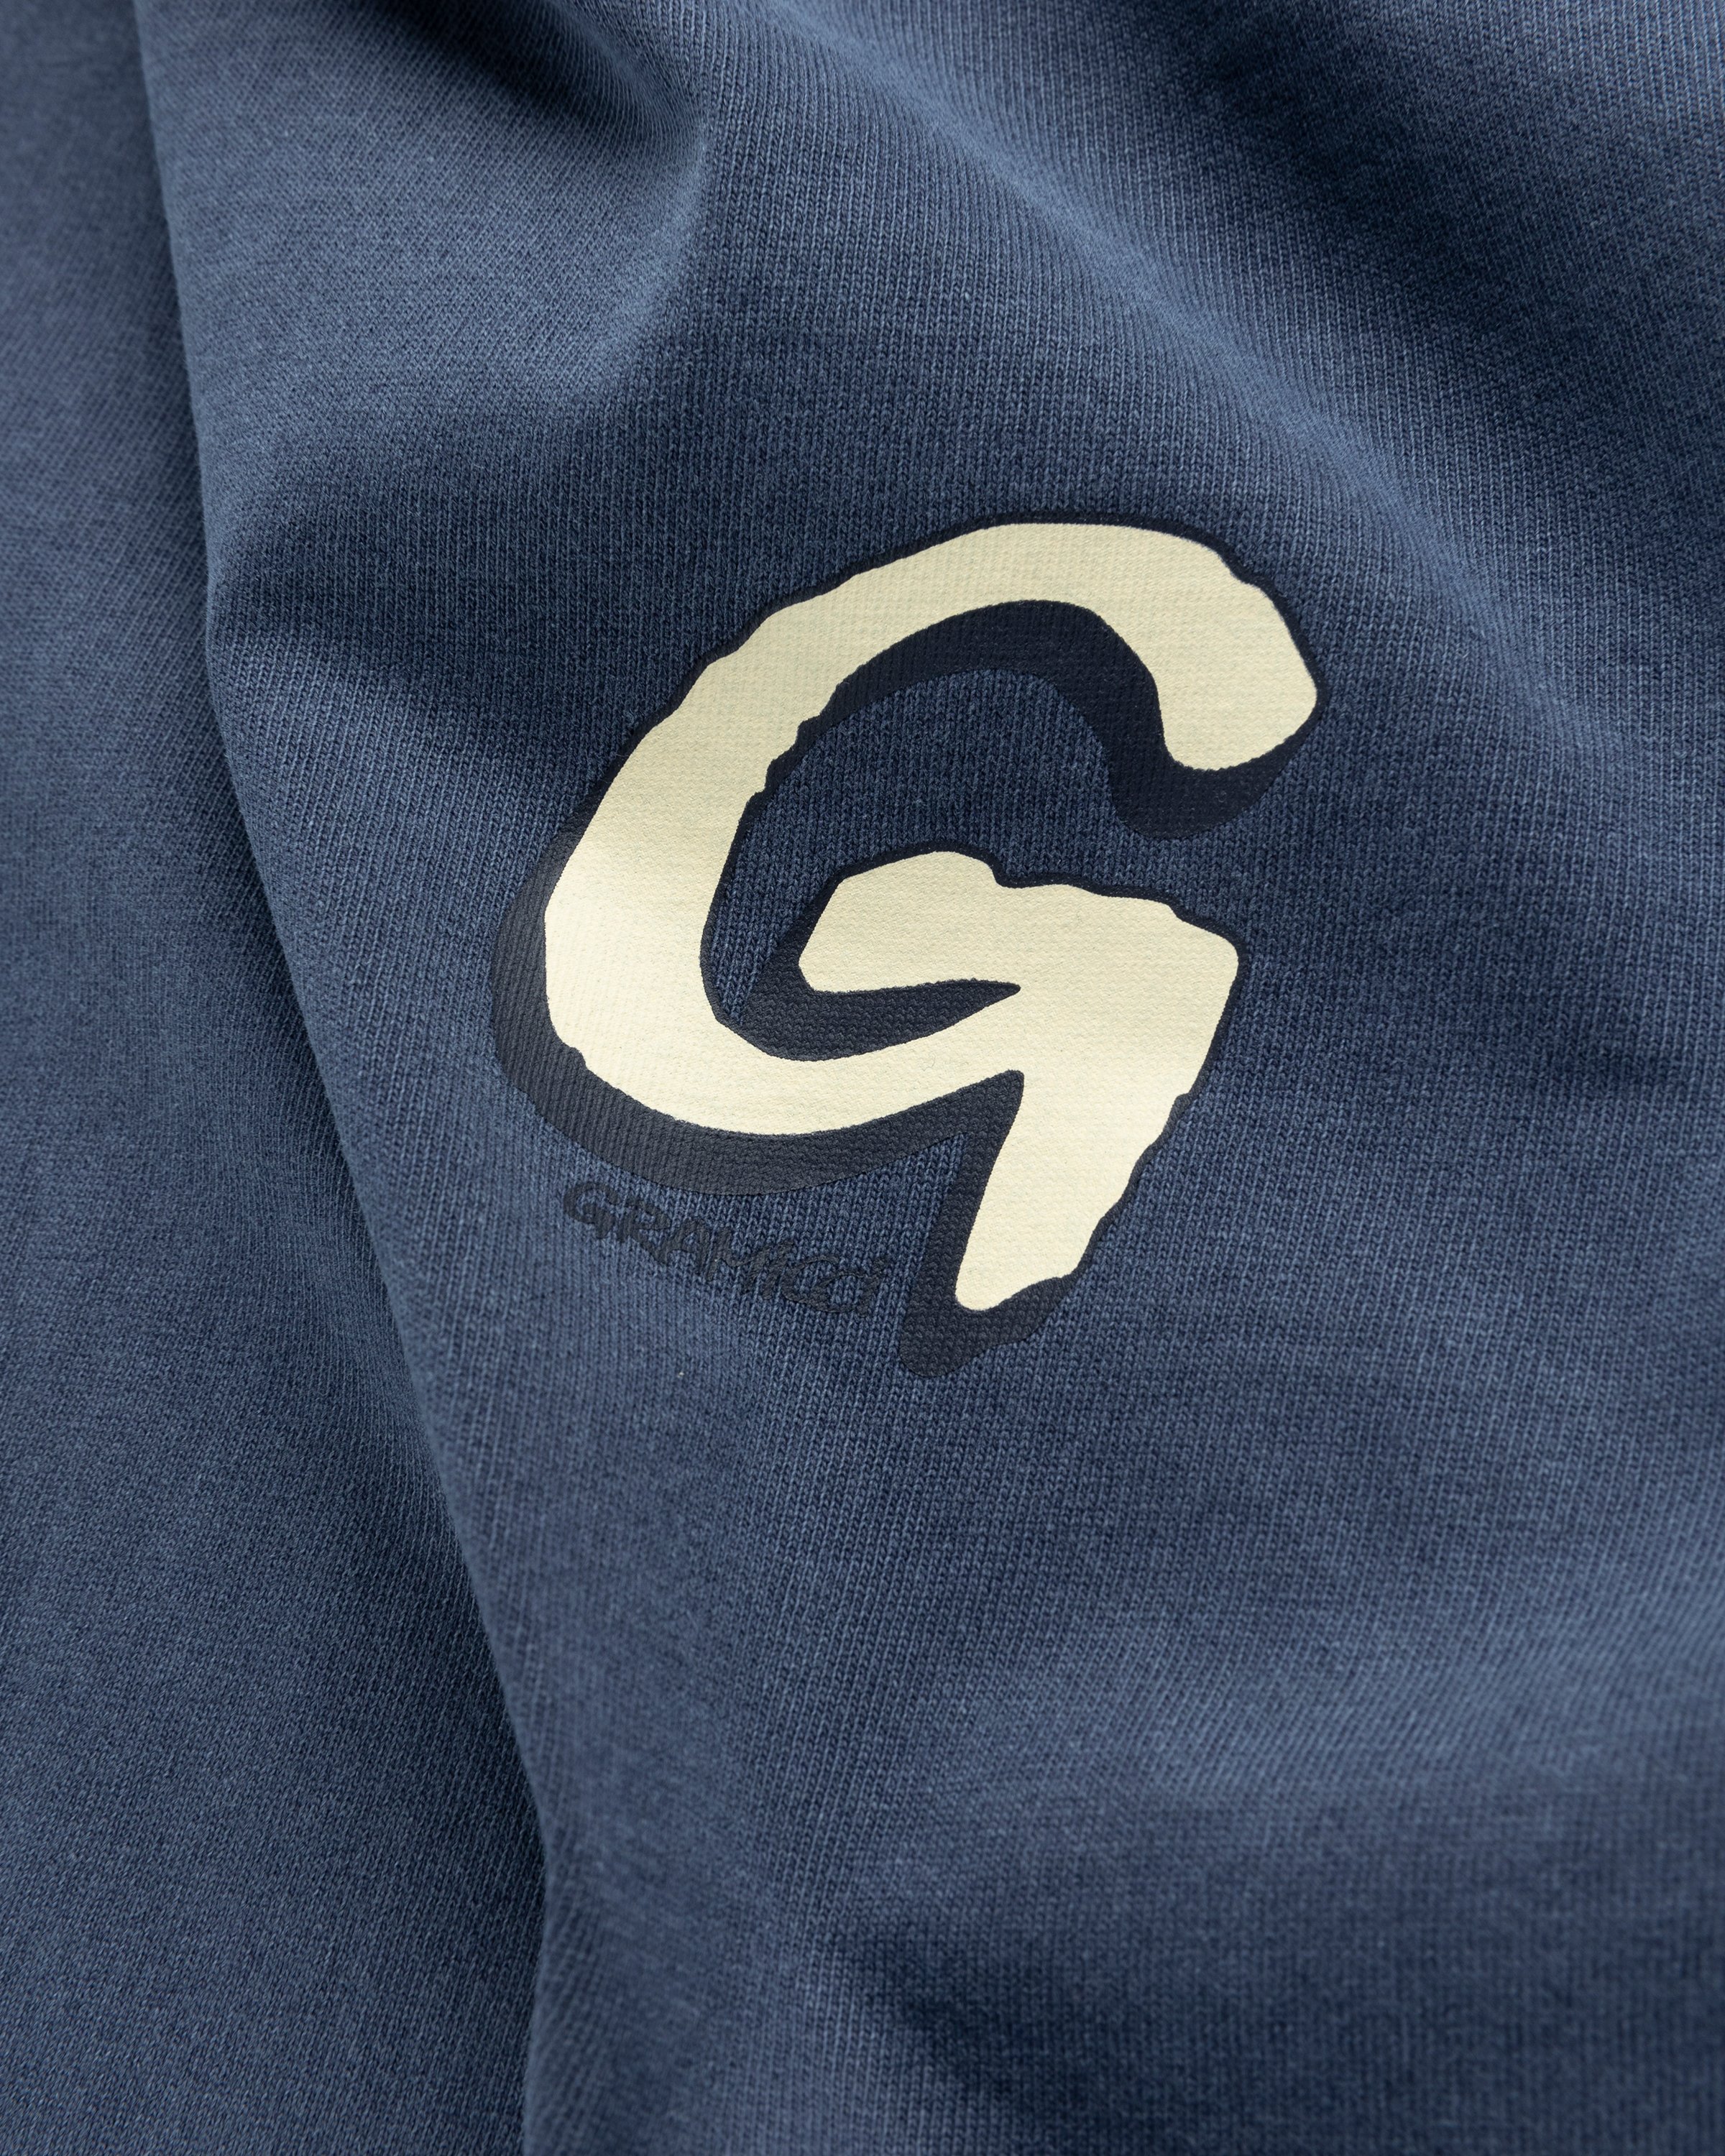 Gramicci - Big G-Logo Tee Navy Pigment - Clothing - Blue - Image 2